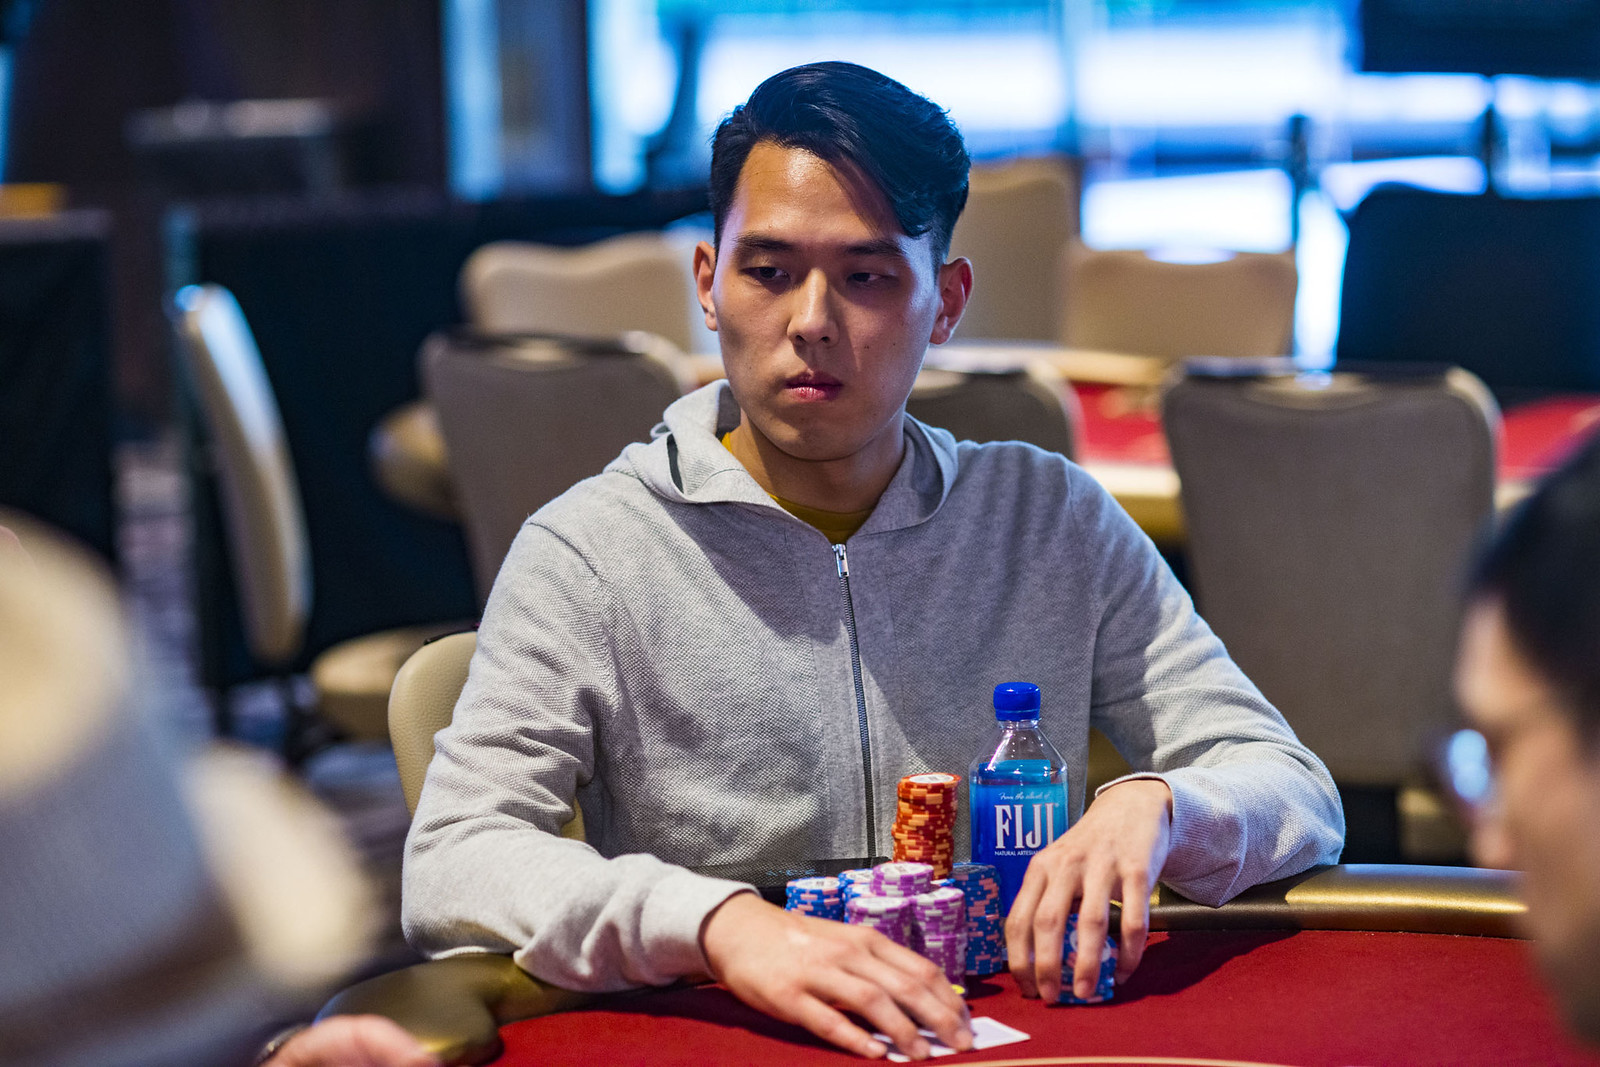 Sung Joo Hyun Wins the 2021 World Poker Tour DeepStacks $1,600 Buy-in No-Limit Hold’em